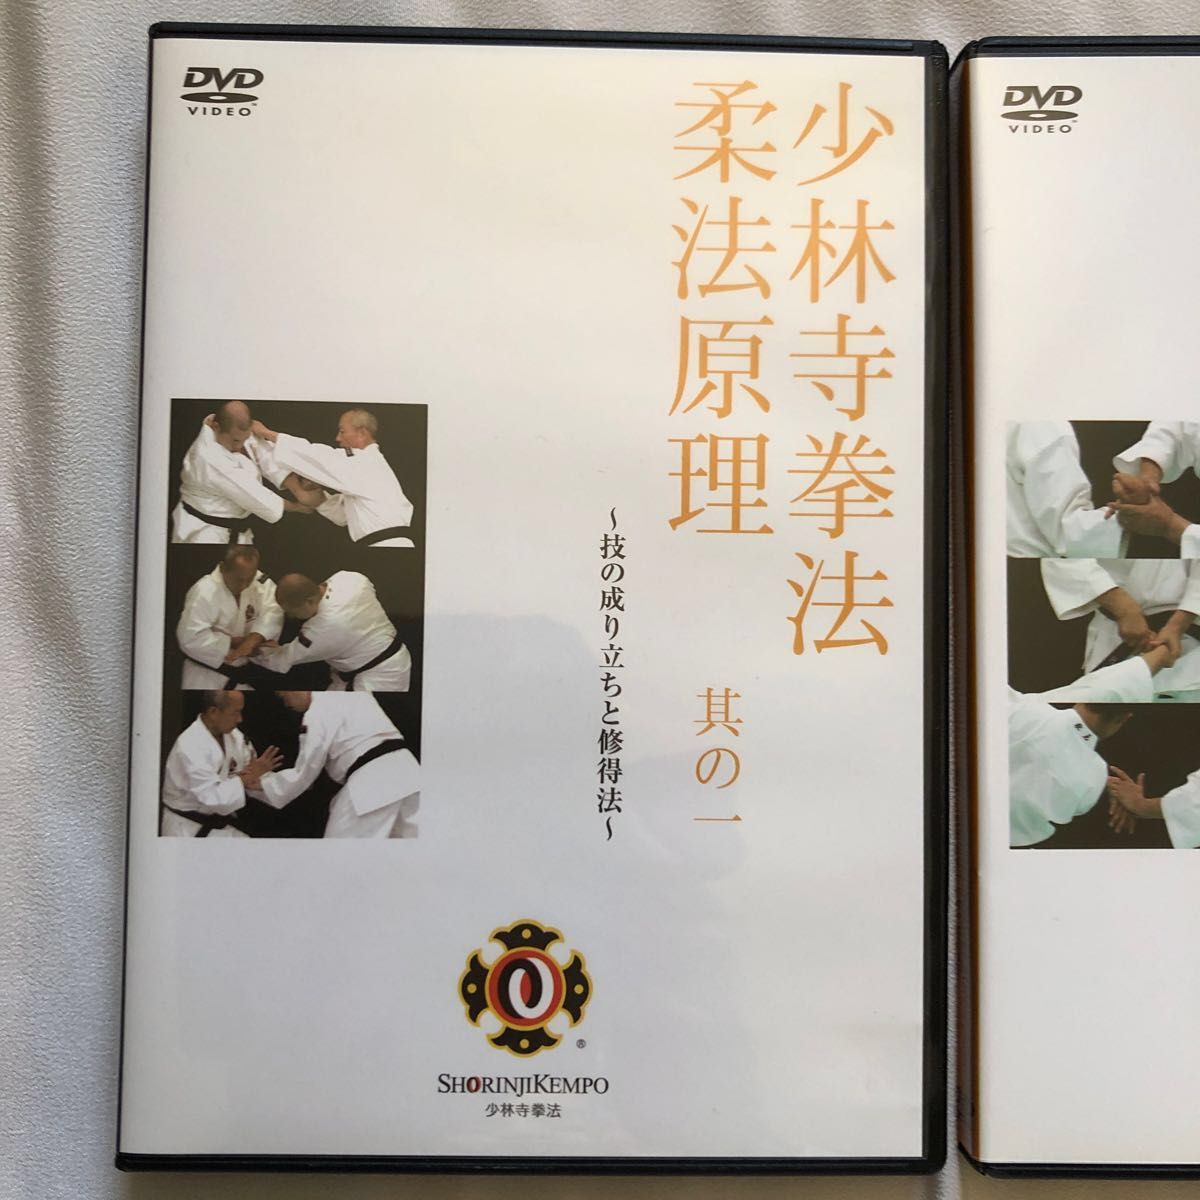 GD2-019 DVD 少林寺拳法 柔法原理其の一 技の成り立ちと習得法 著作